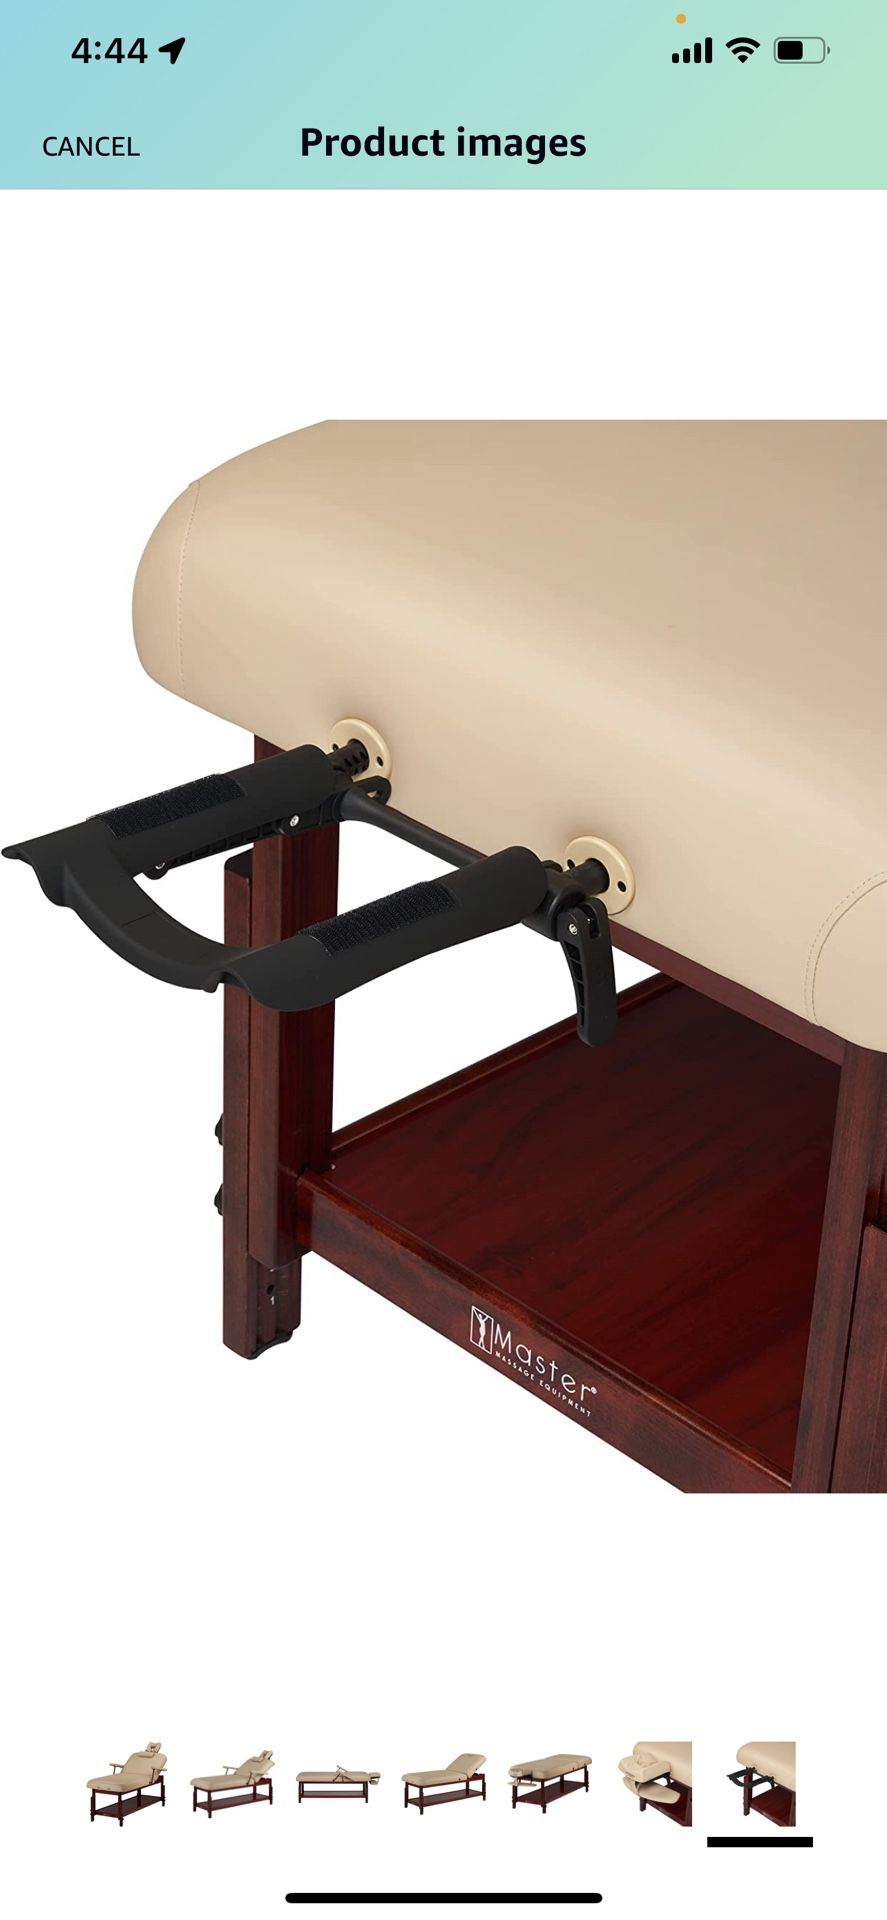 Master Massage Equipment 30 Coronado LX Portable Massage Table Package  Royal Blue for Sale in La Canada Flt, CA - OfferUp